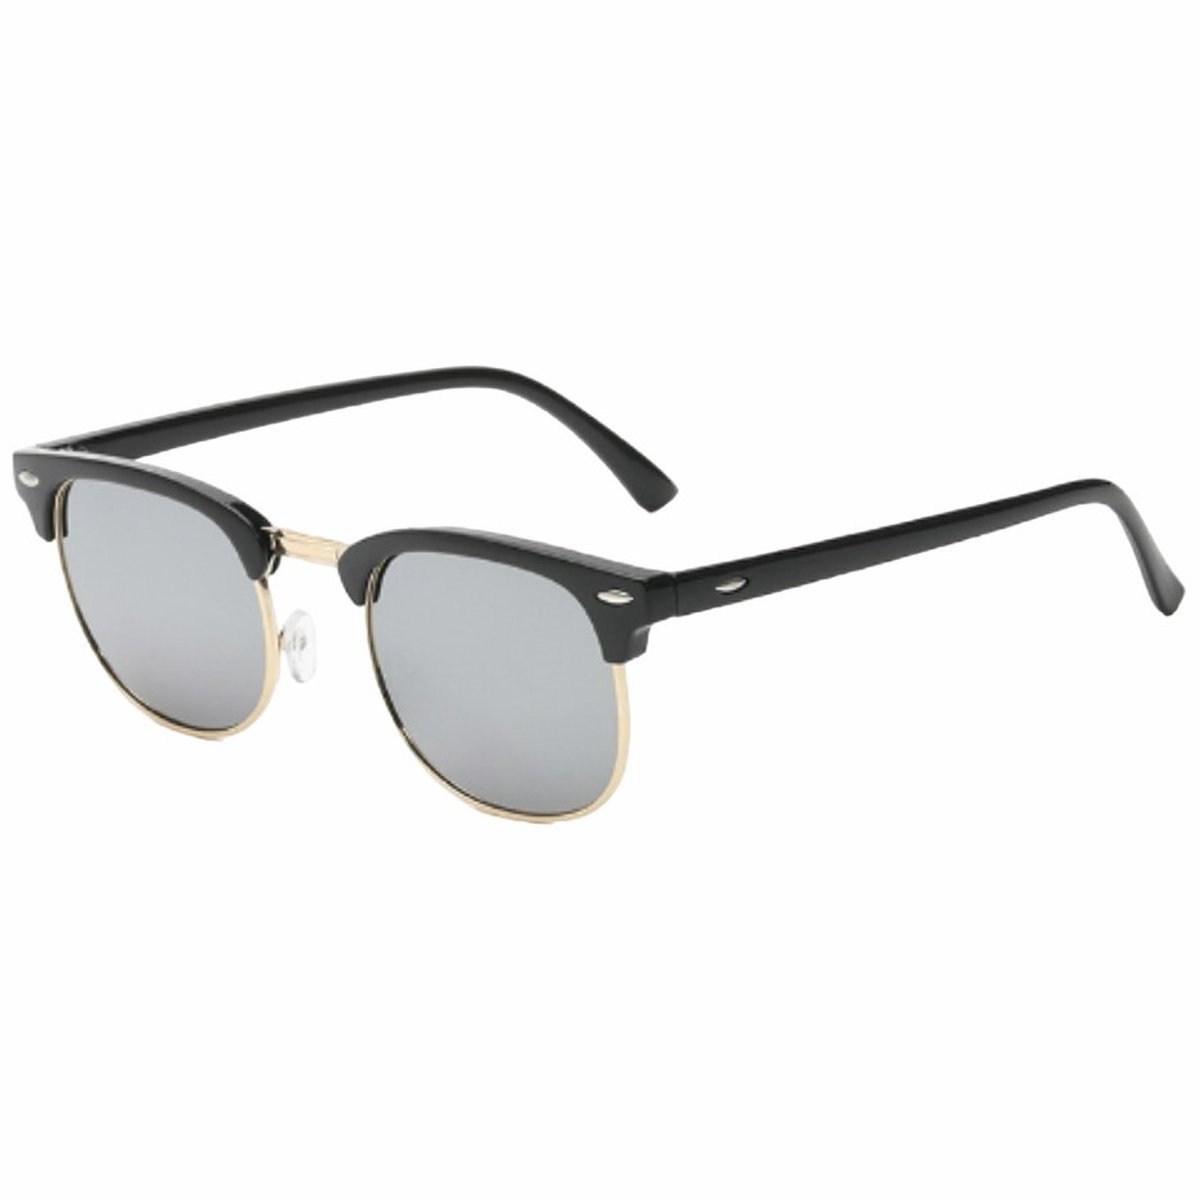 Fako Sunglasses® - Club Style Zonnebril - Polariserend - Dames - Heren - Zwart/Goud - Zilver